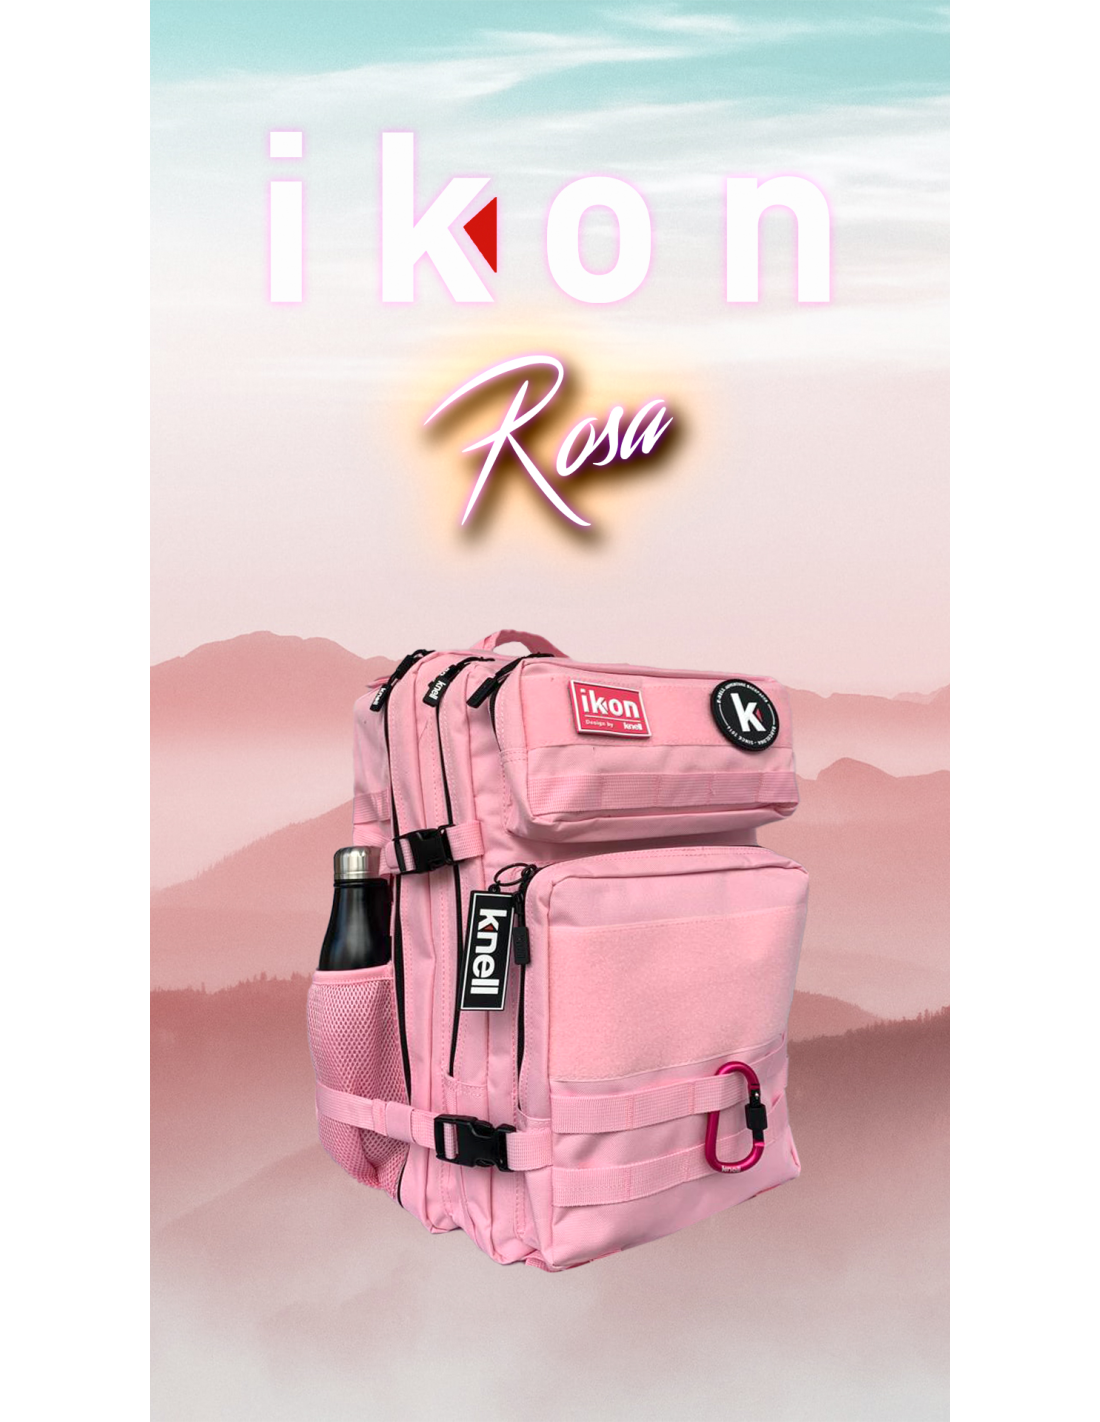 mochila militar rosa panelada con porta botellas laterales fitness y gym